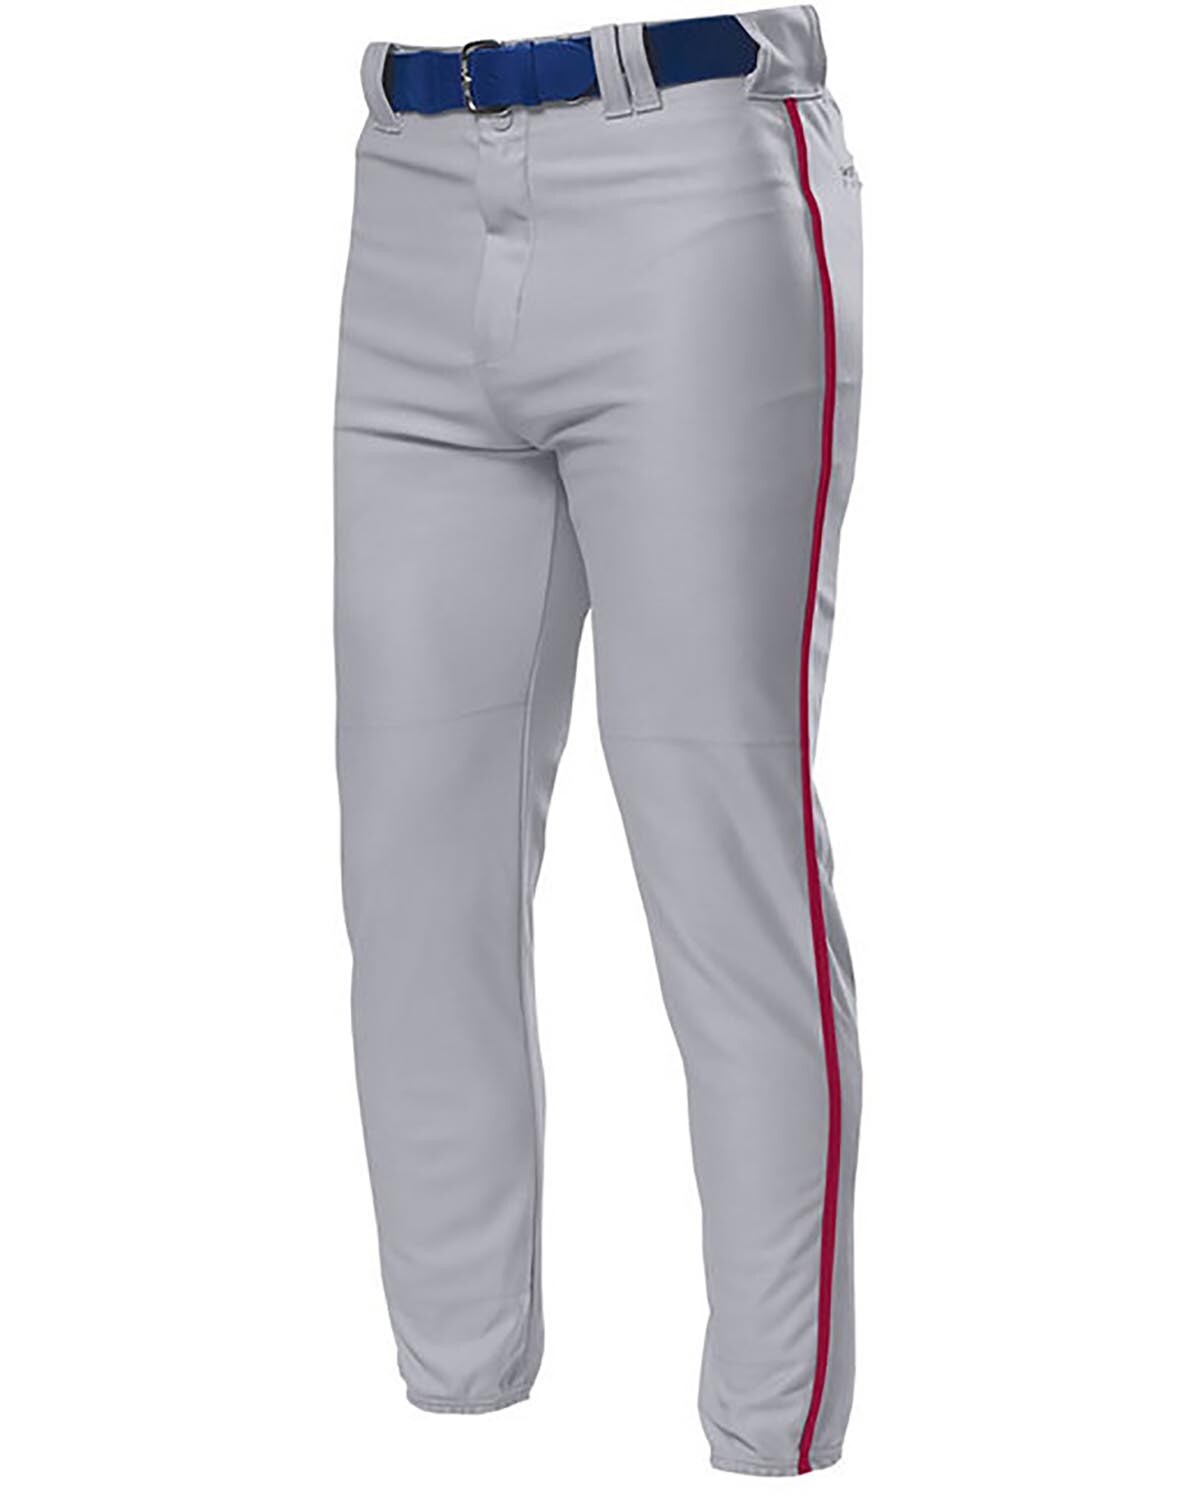 Basic Baseball Pants: Drawstring, Elastic Bottom – ™